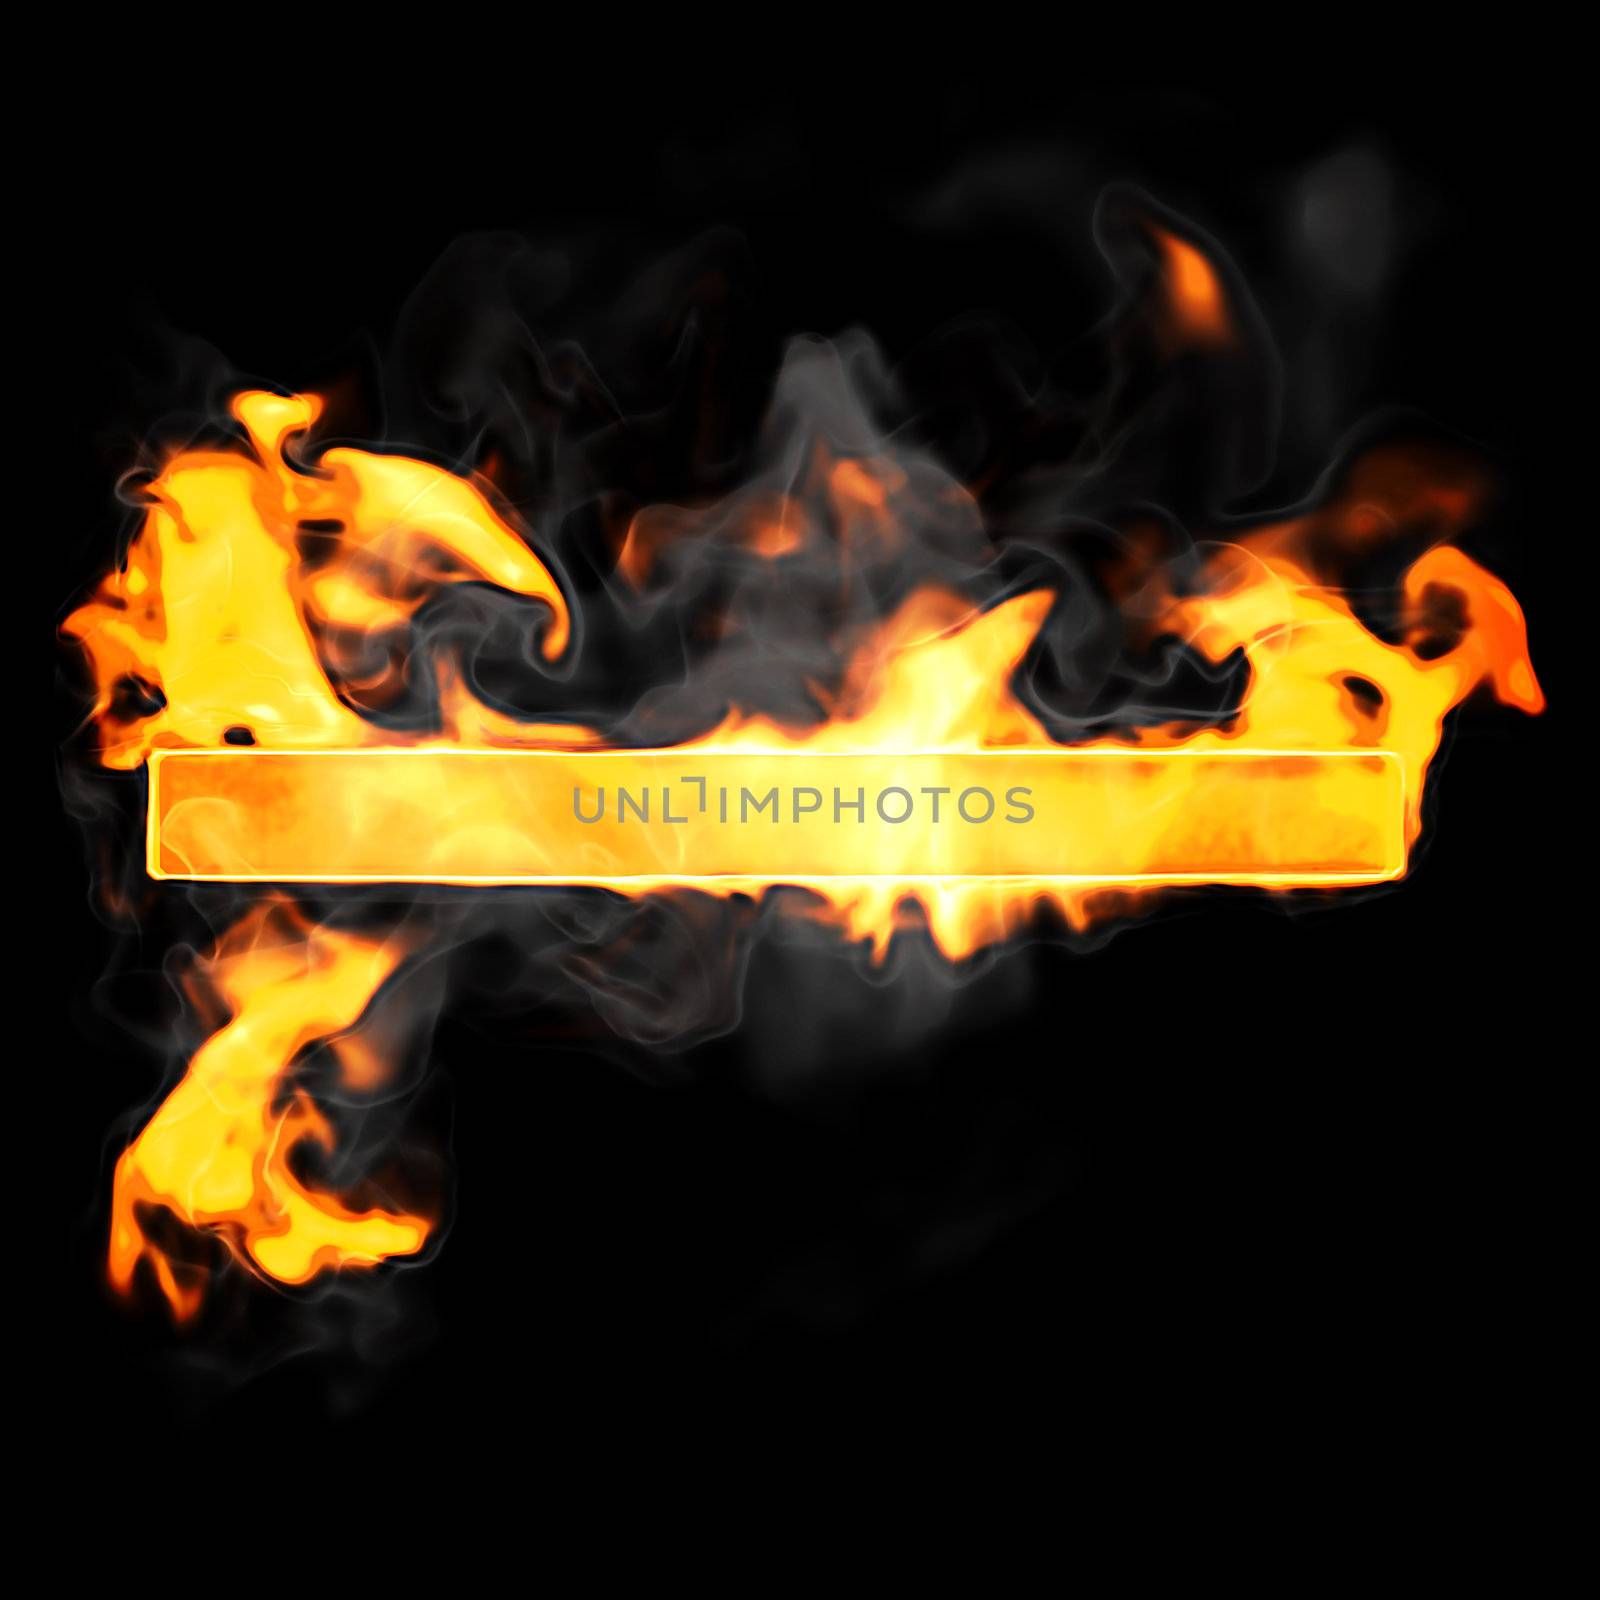 Burning and flame font hyphen symbol over black background